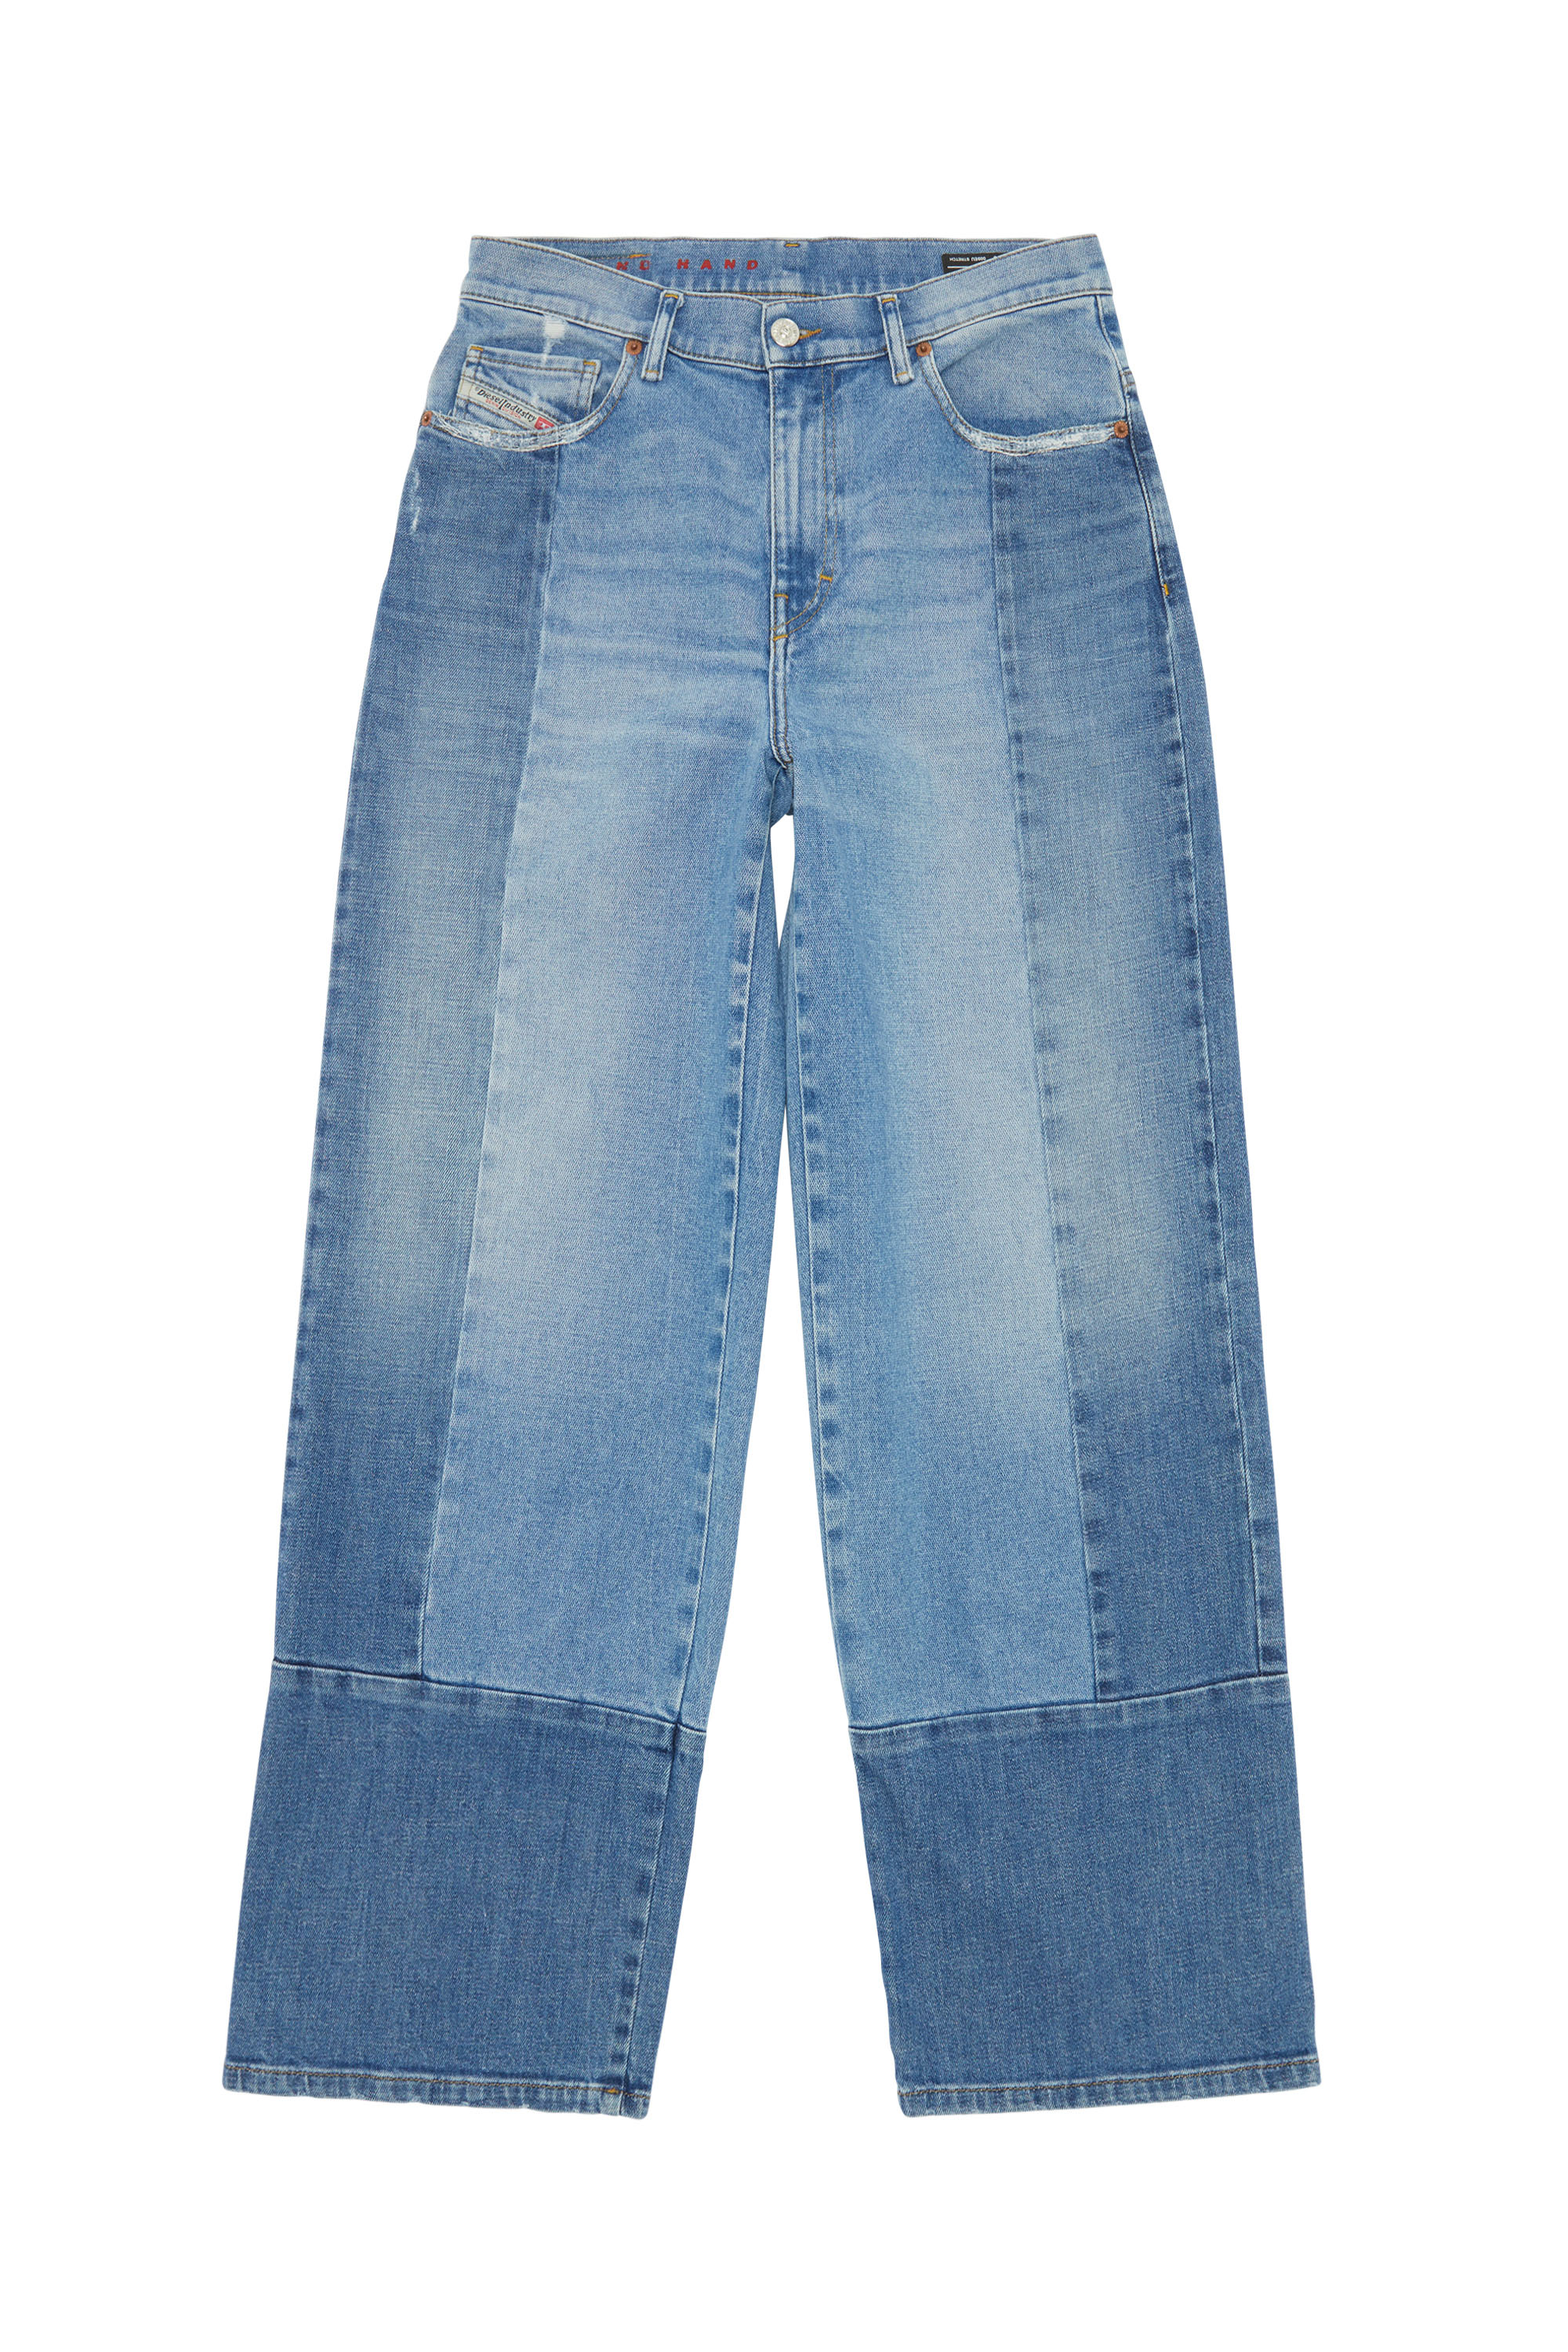 WIDEE-X, Light Blue - Jeans